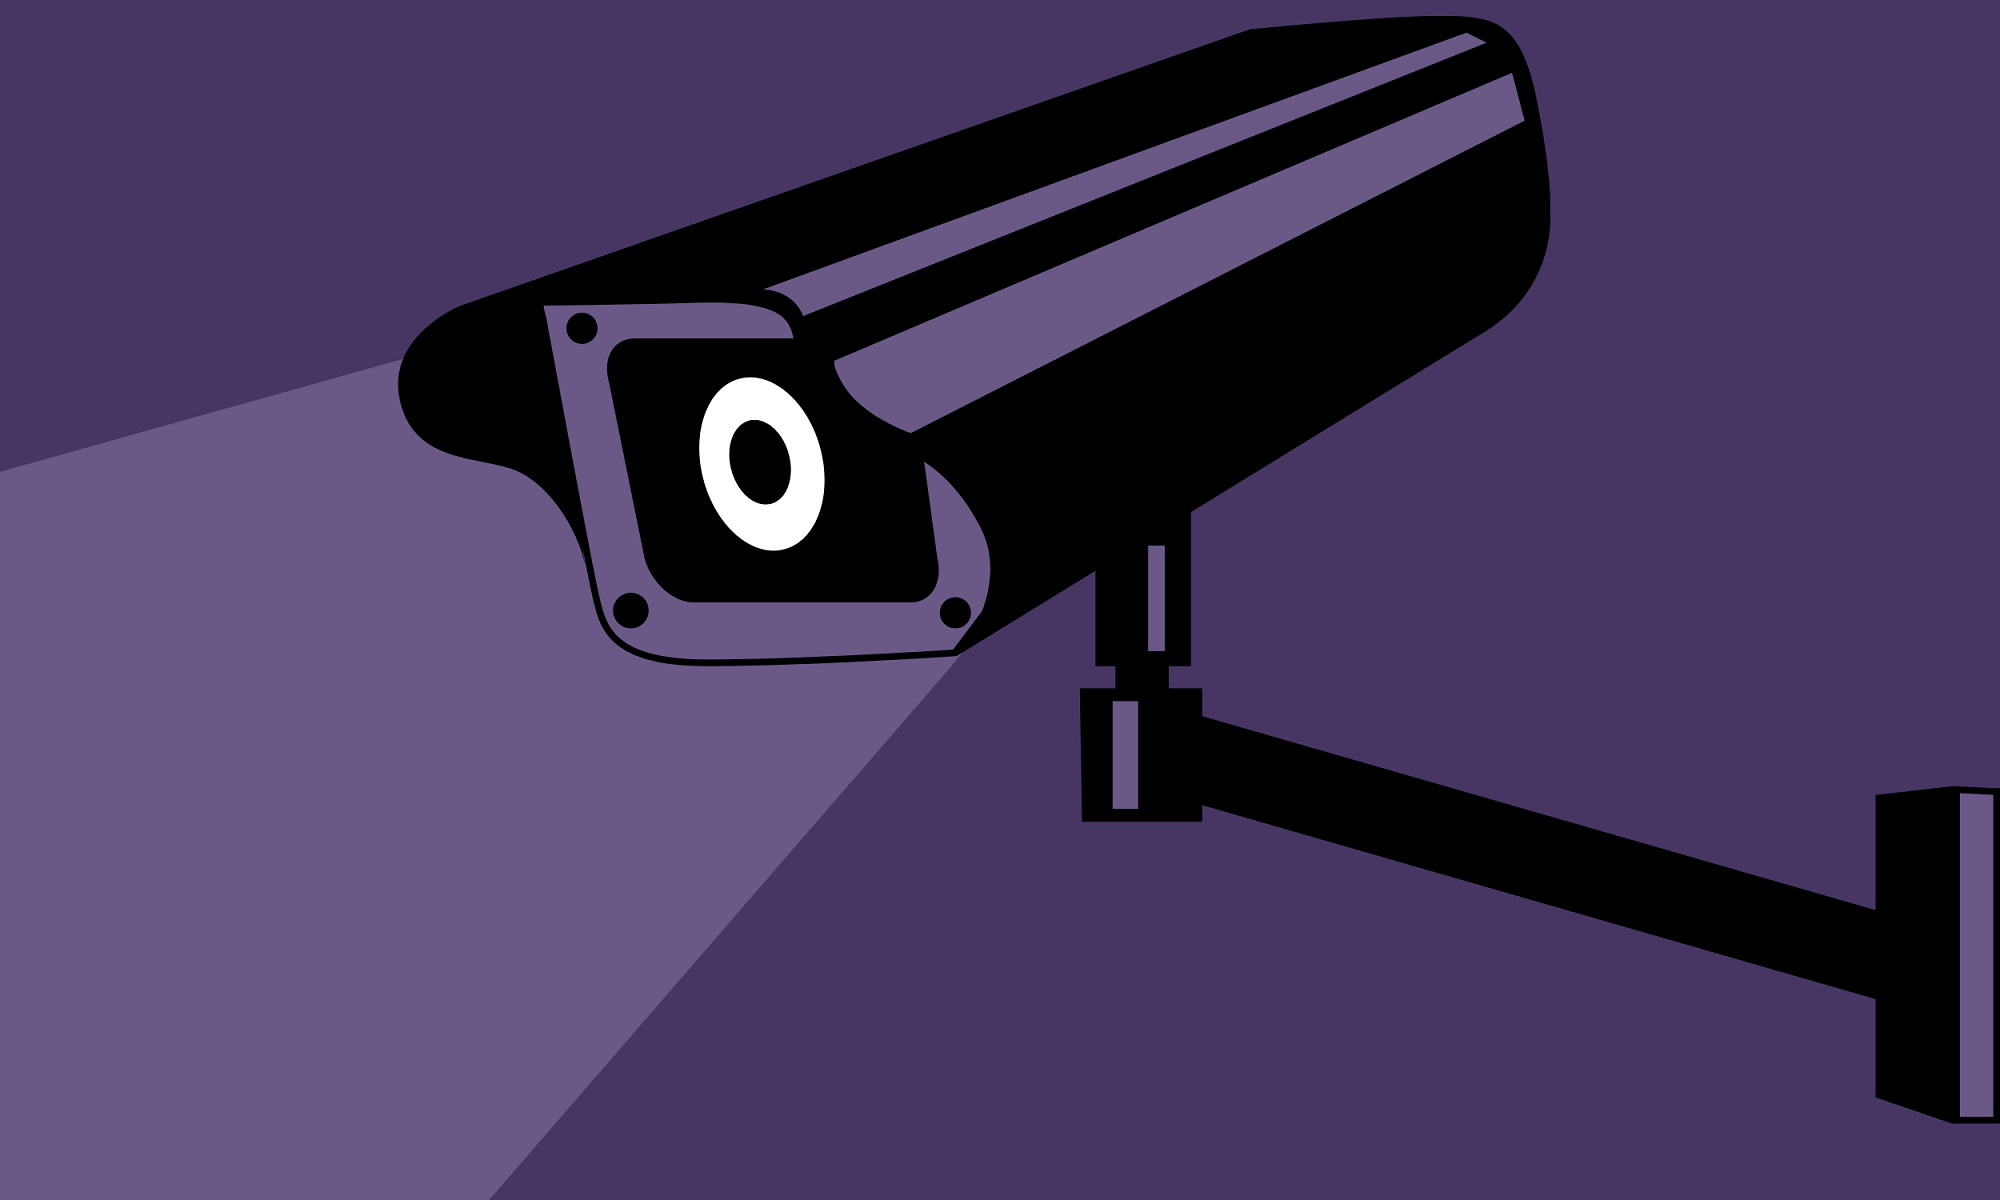 Surveillance Capitalism